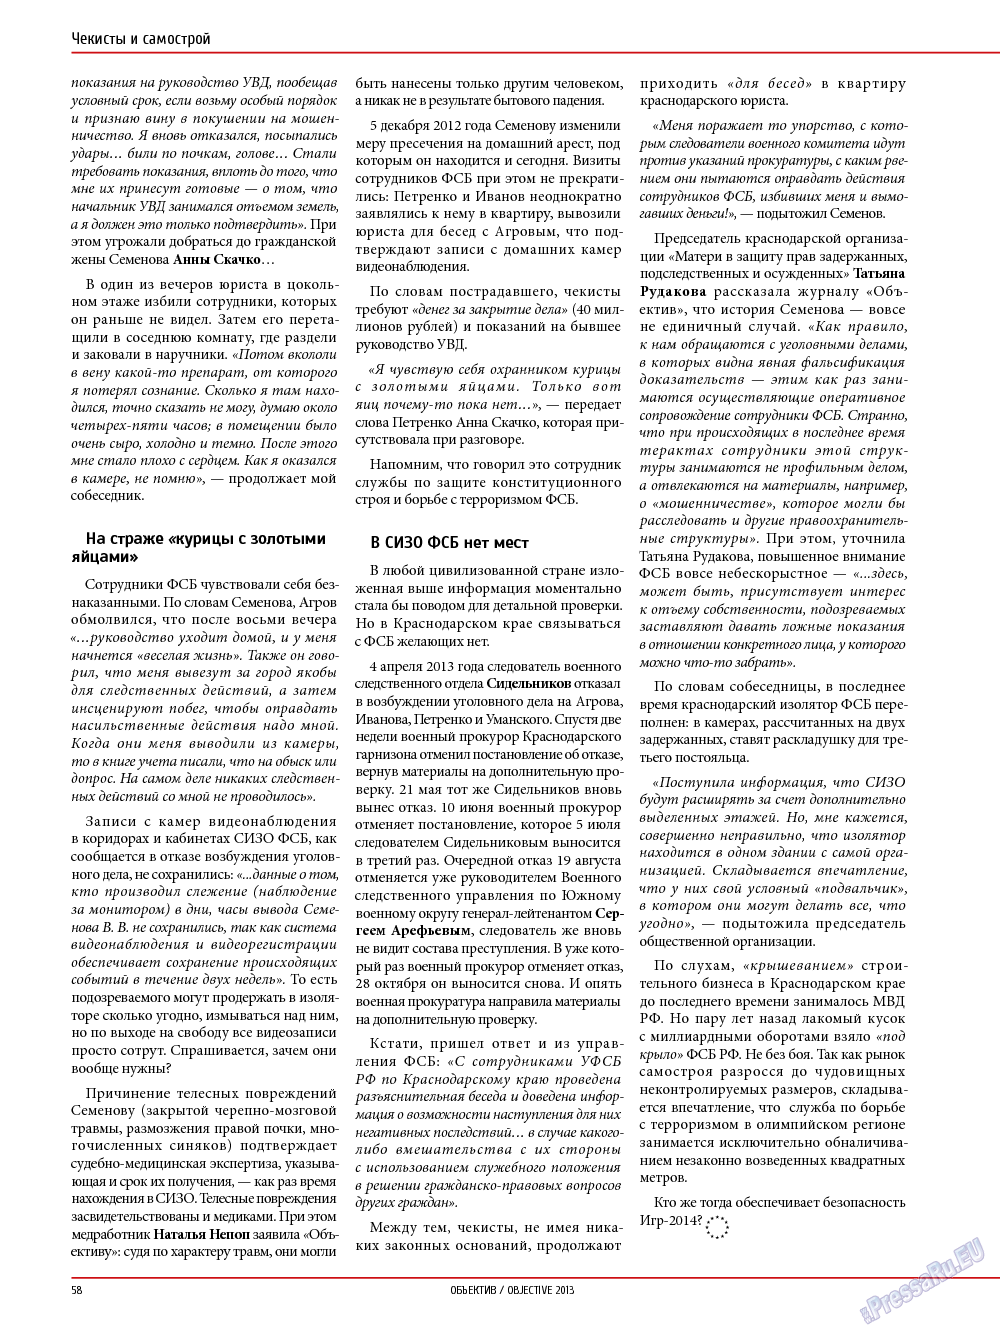 Объектив EU, журнал. 2014 №1 стр.58